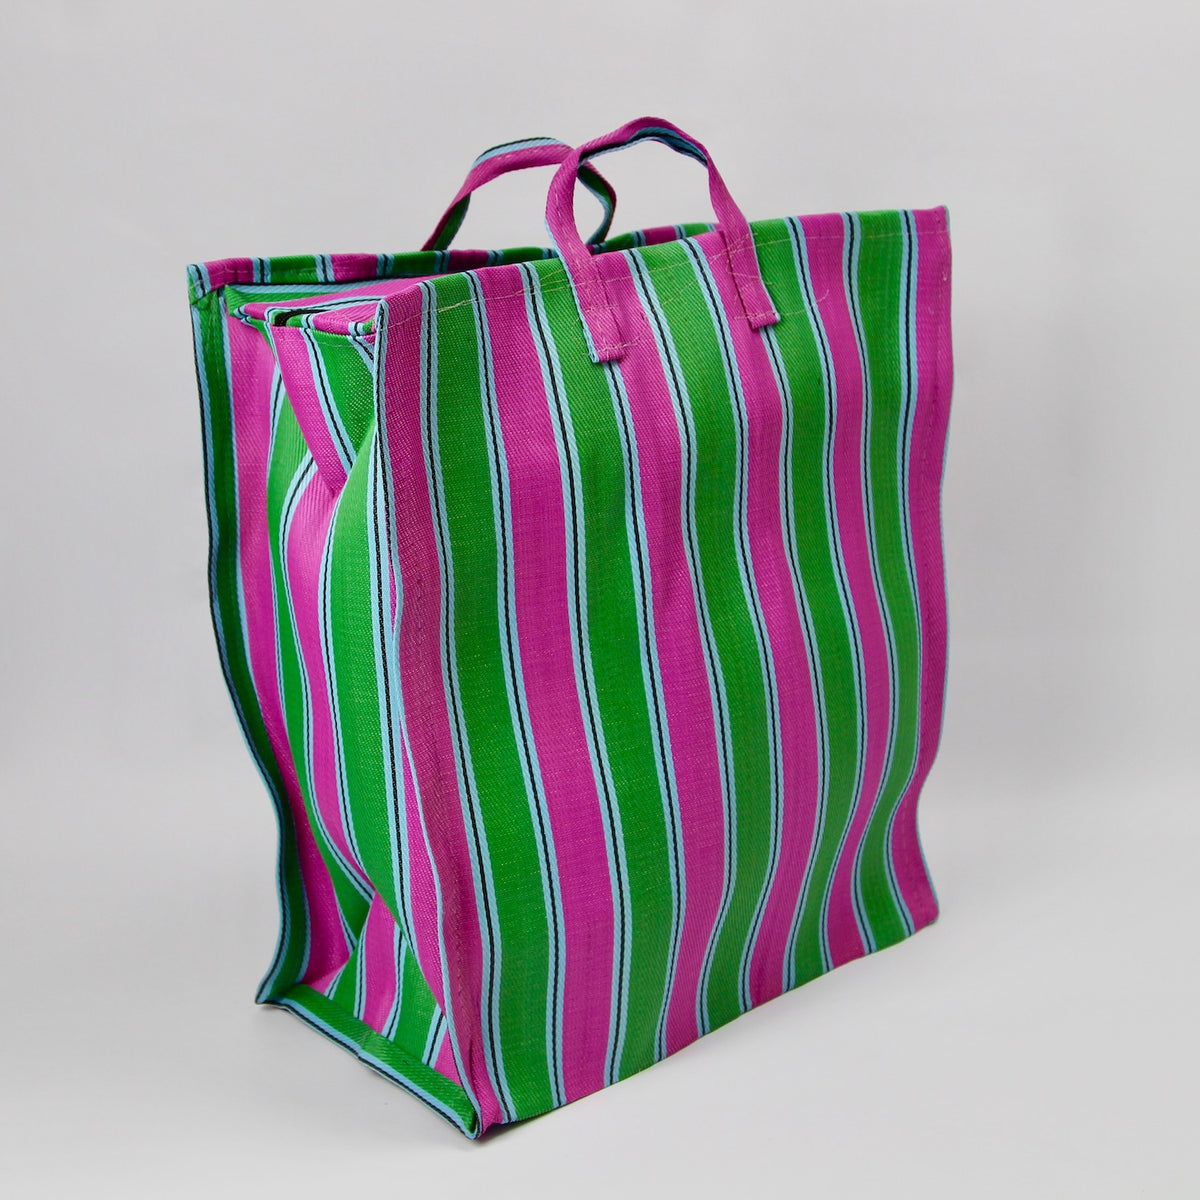 Size 5 Striped Market Bag - Pink/Green/Blue